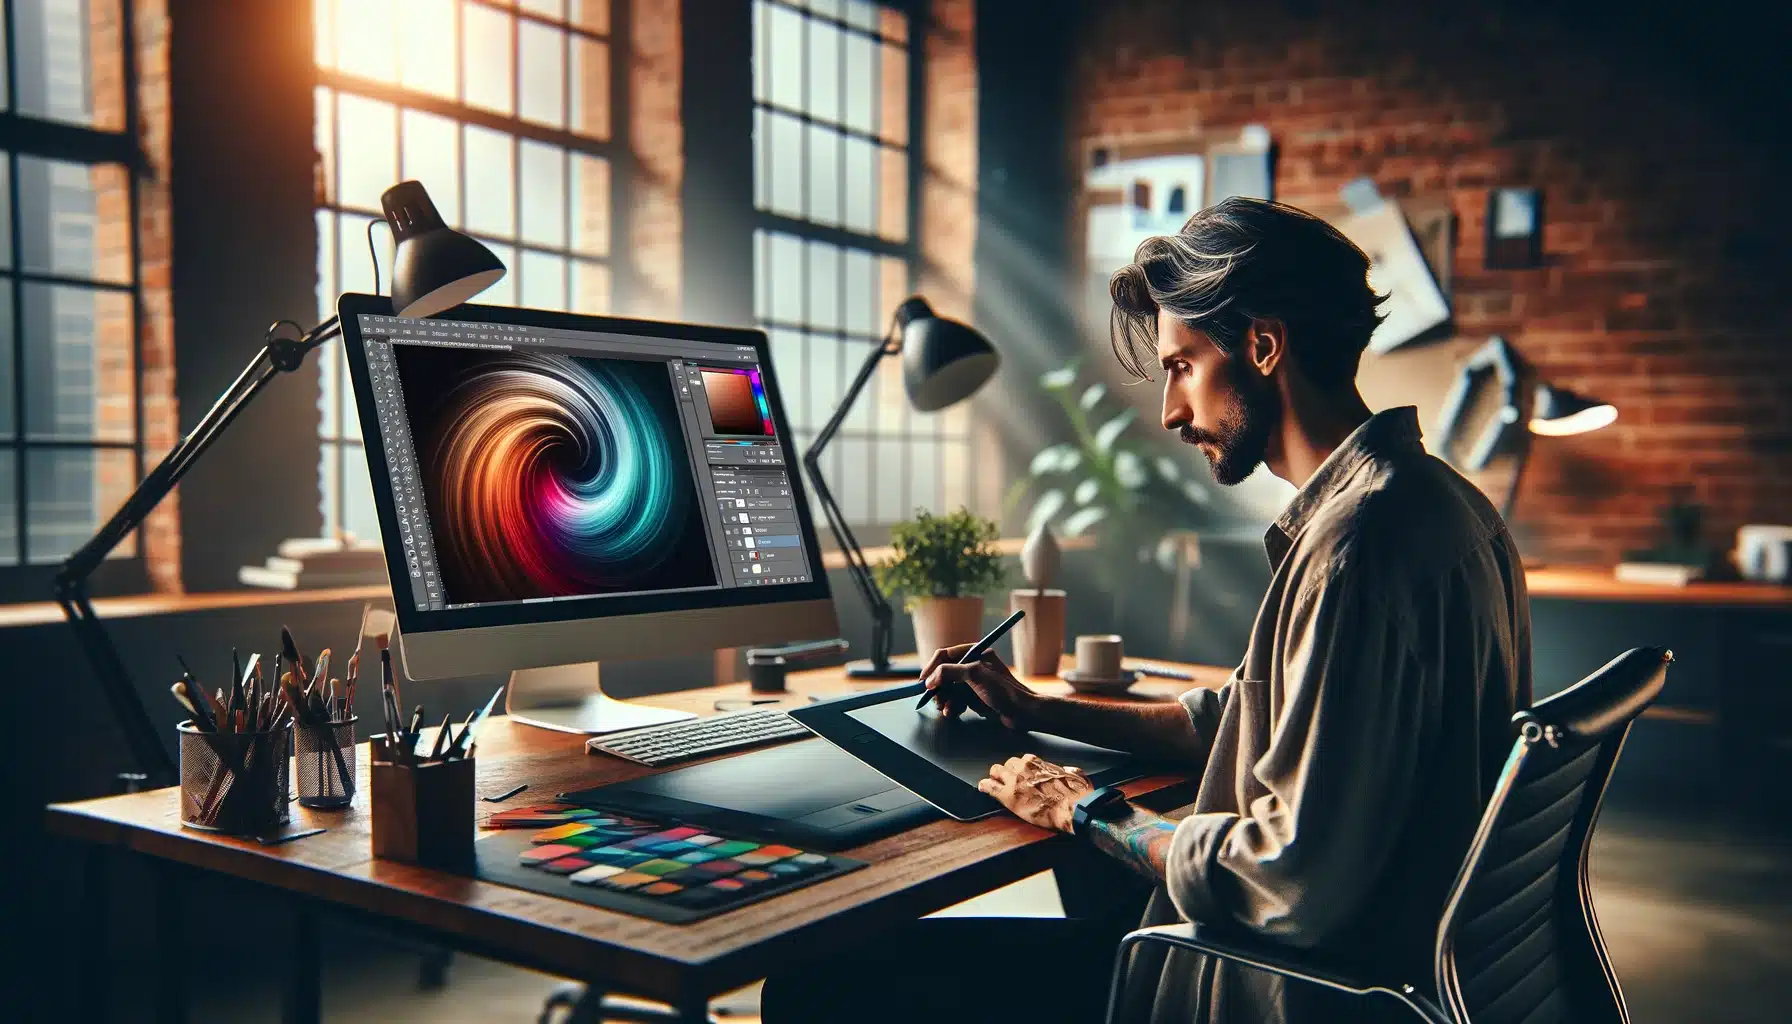 A professional in a modern workspace using editor to blend hues, showcasing digital art skills.